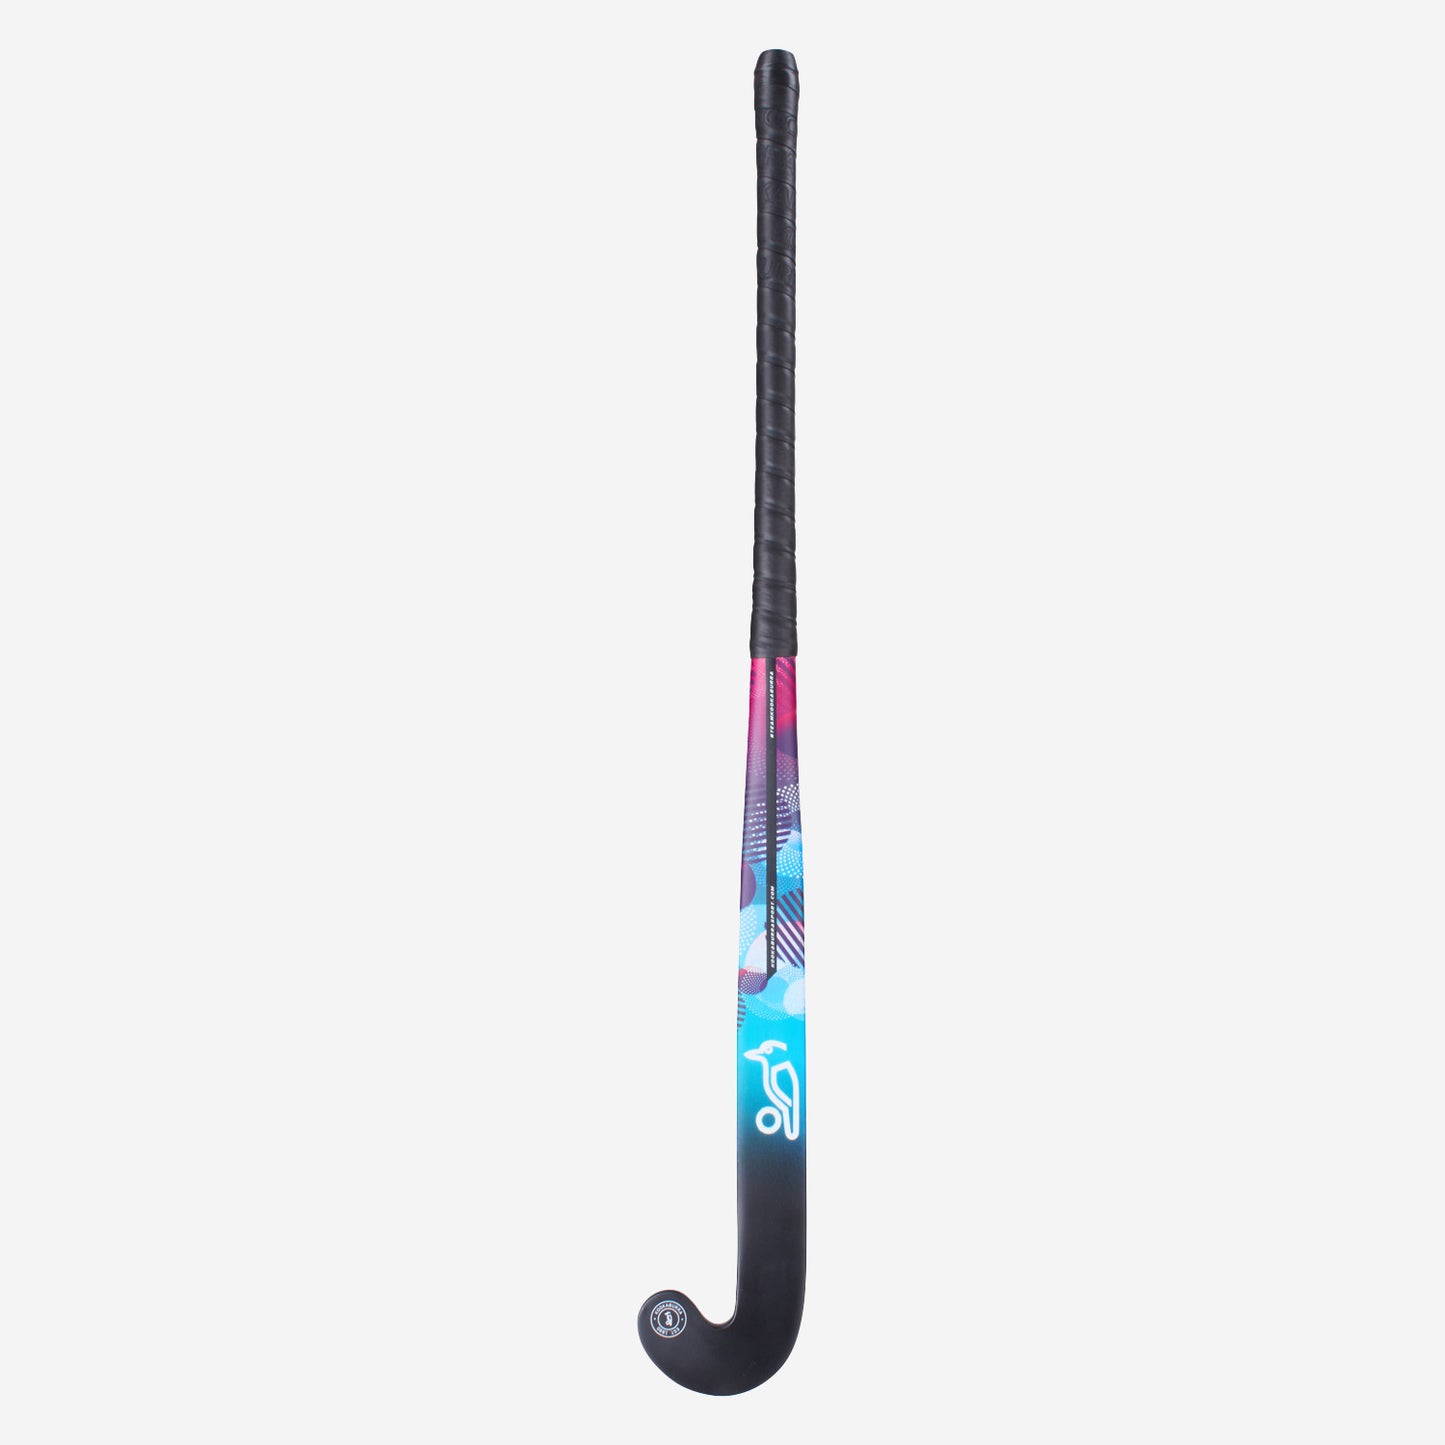 Kookaburra Swirl Wood Hockey Stick